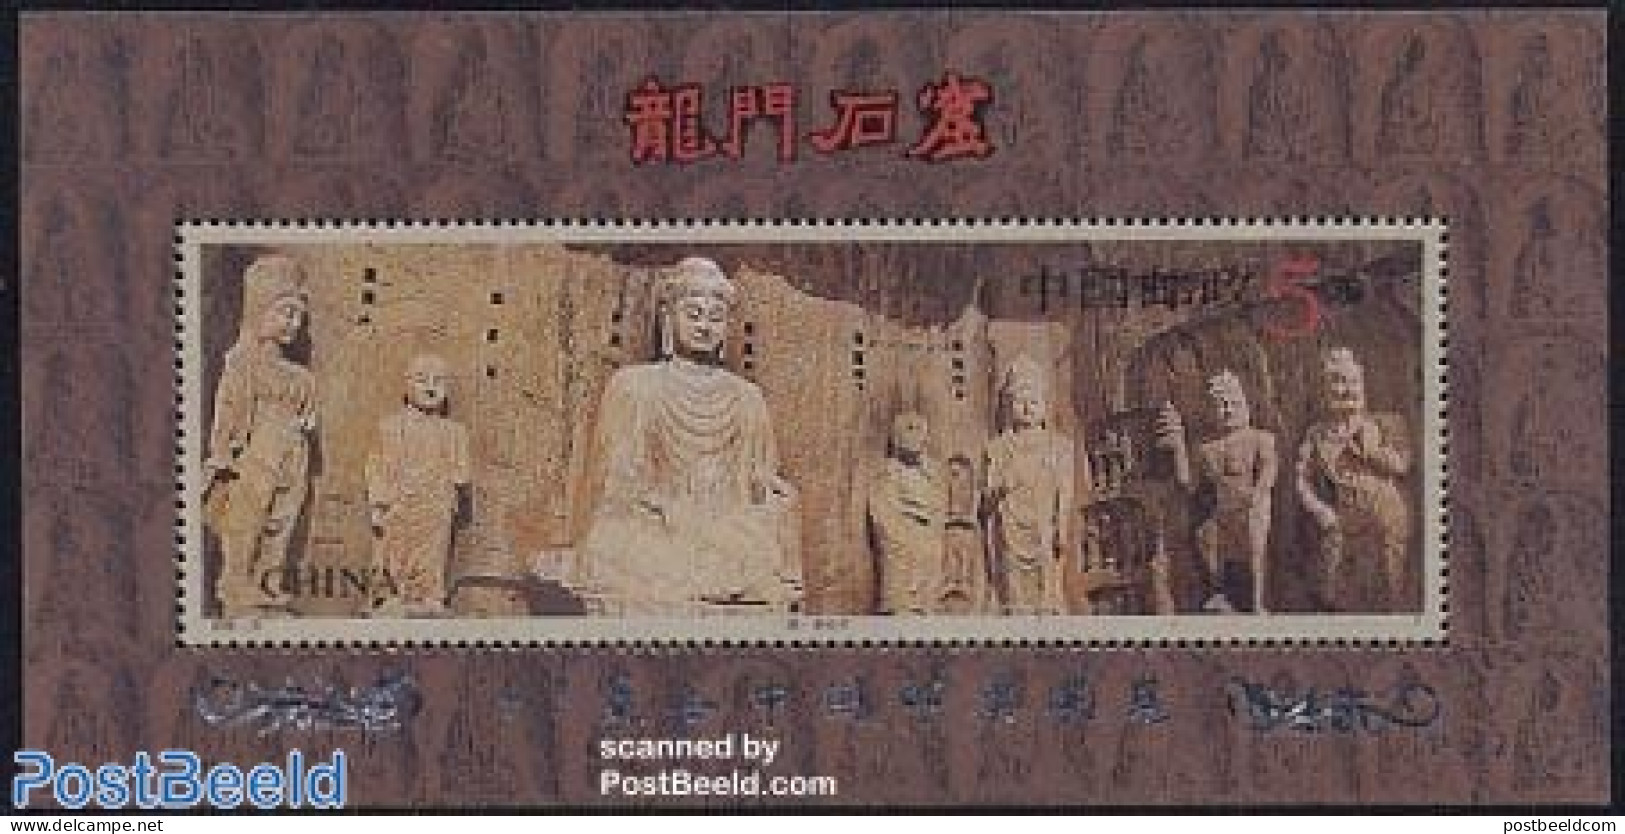 China People’s Republic 1997 Stamp Exposition S/s (silver Overprint), Mint NH - Ongebruikt